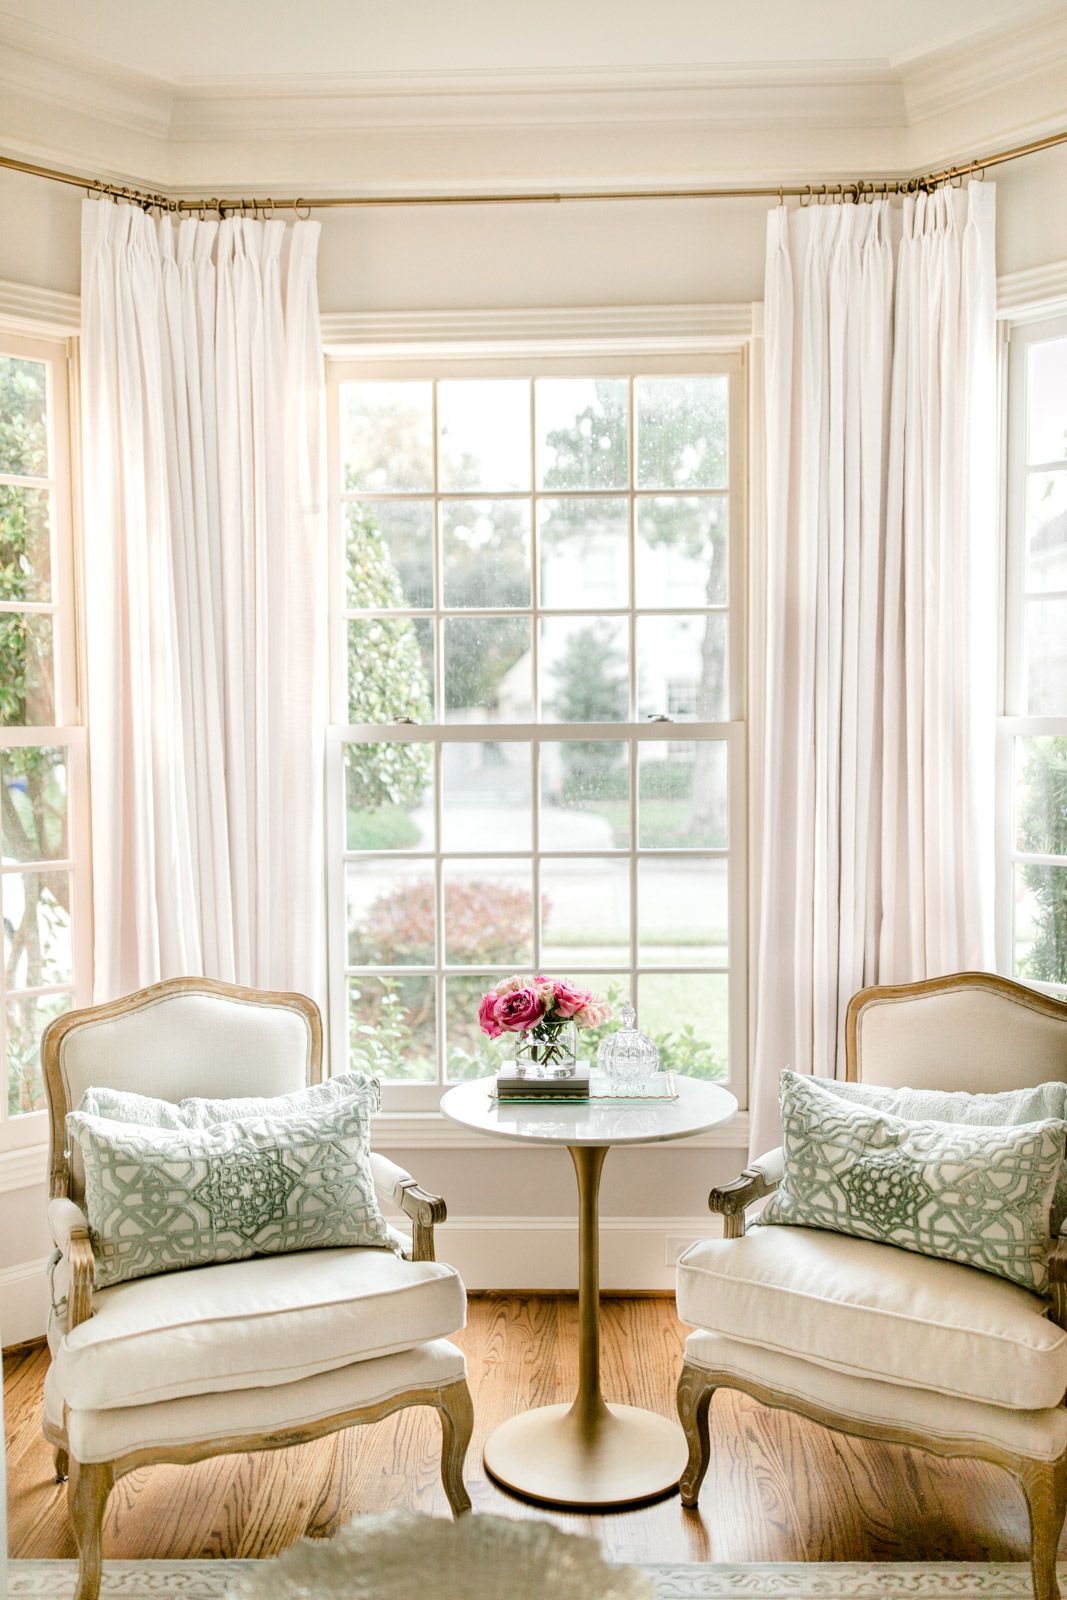 Window drapes- the best window coverings